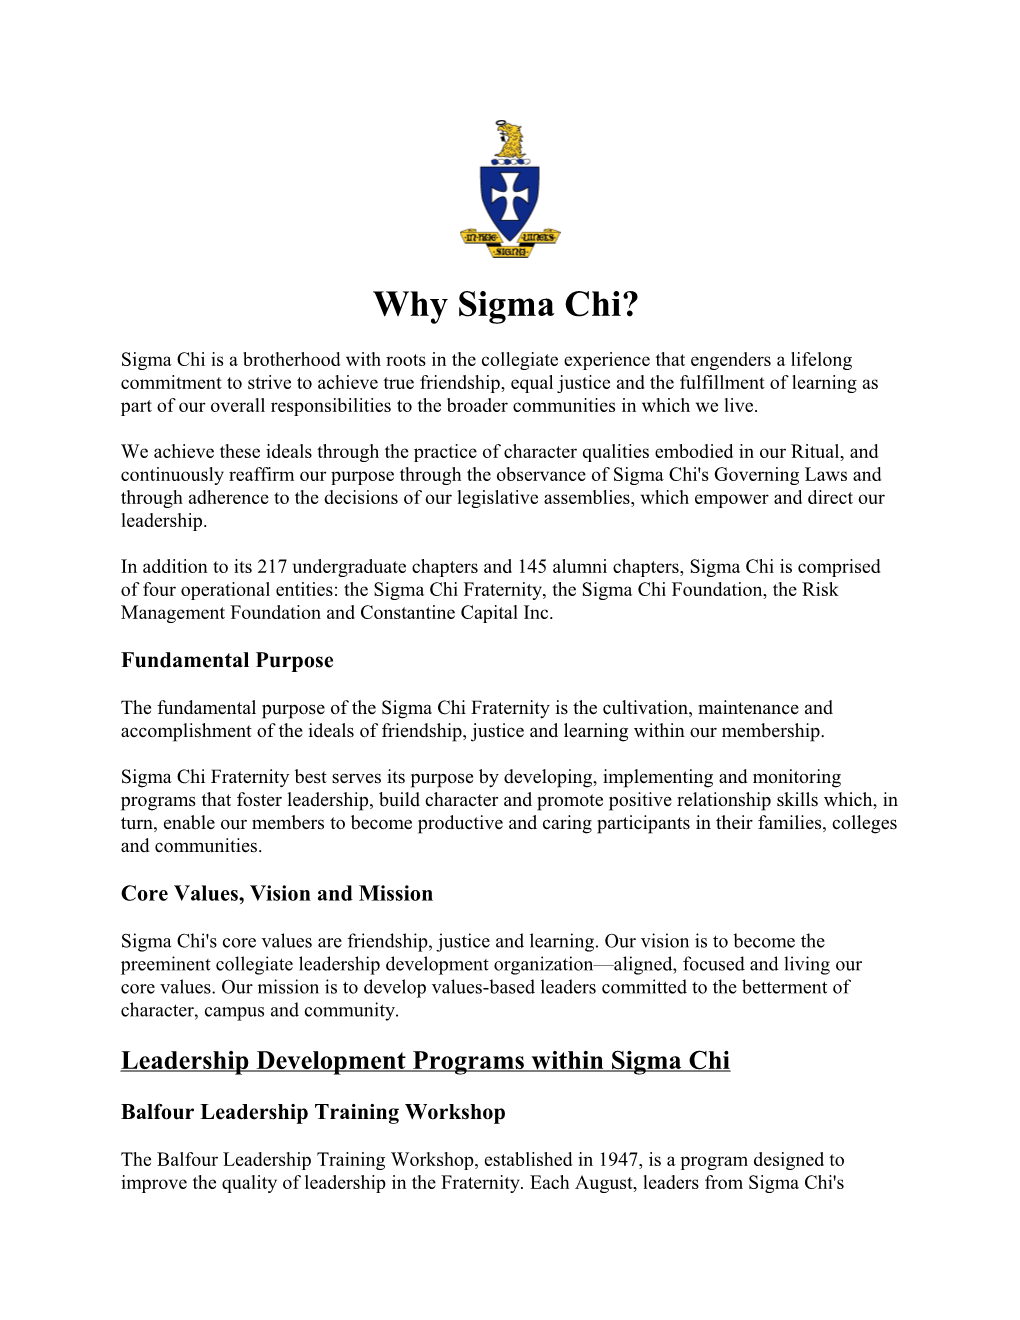 Leadership Development Programs Within Sigma Chi